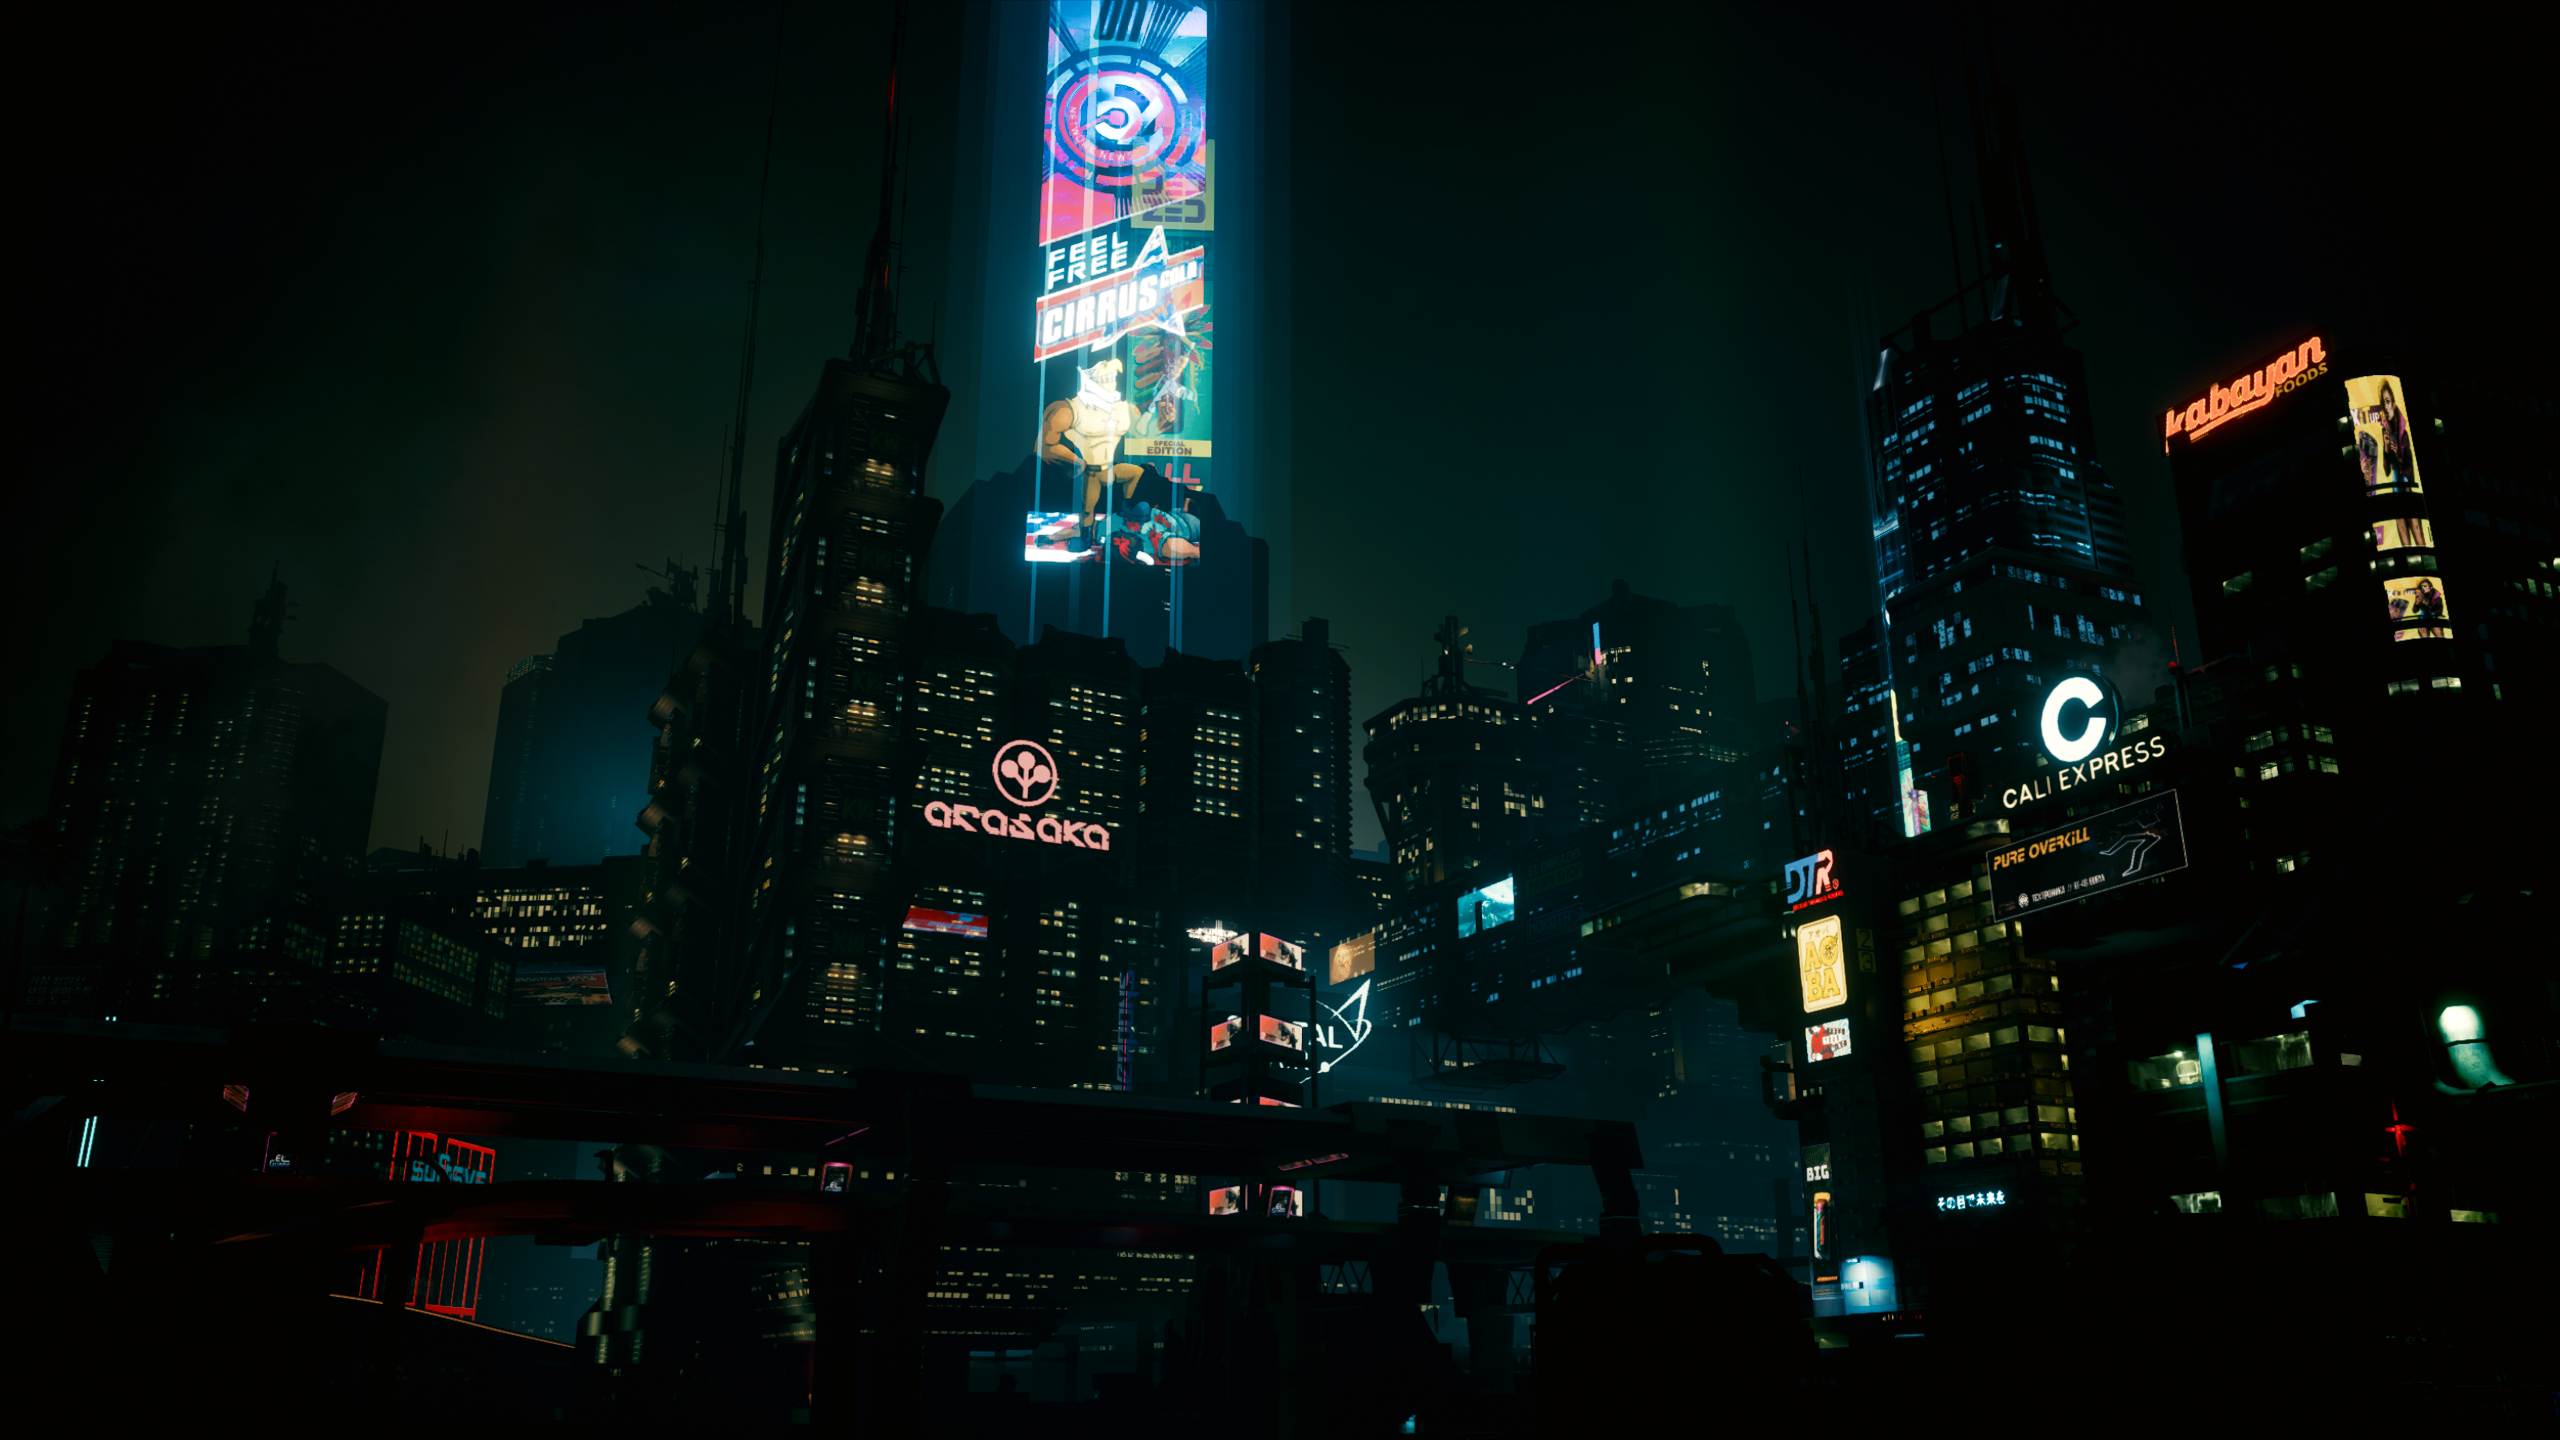 General 2560x1440 Cyberpunk 2077 night city cityscape dark cyberpunk neon city lights atmosphere lights futuristic futuristic city low light video games digital art